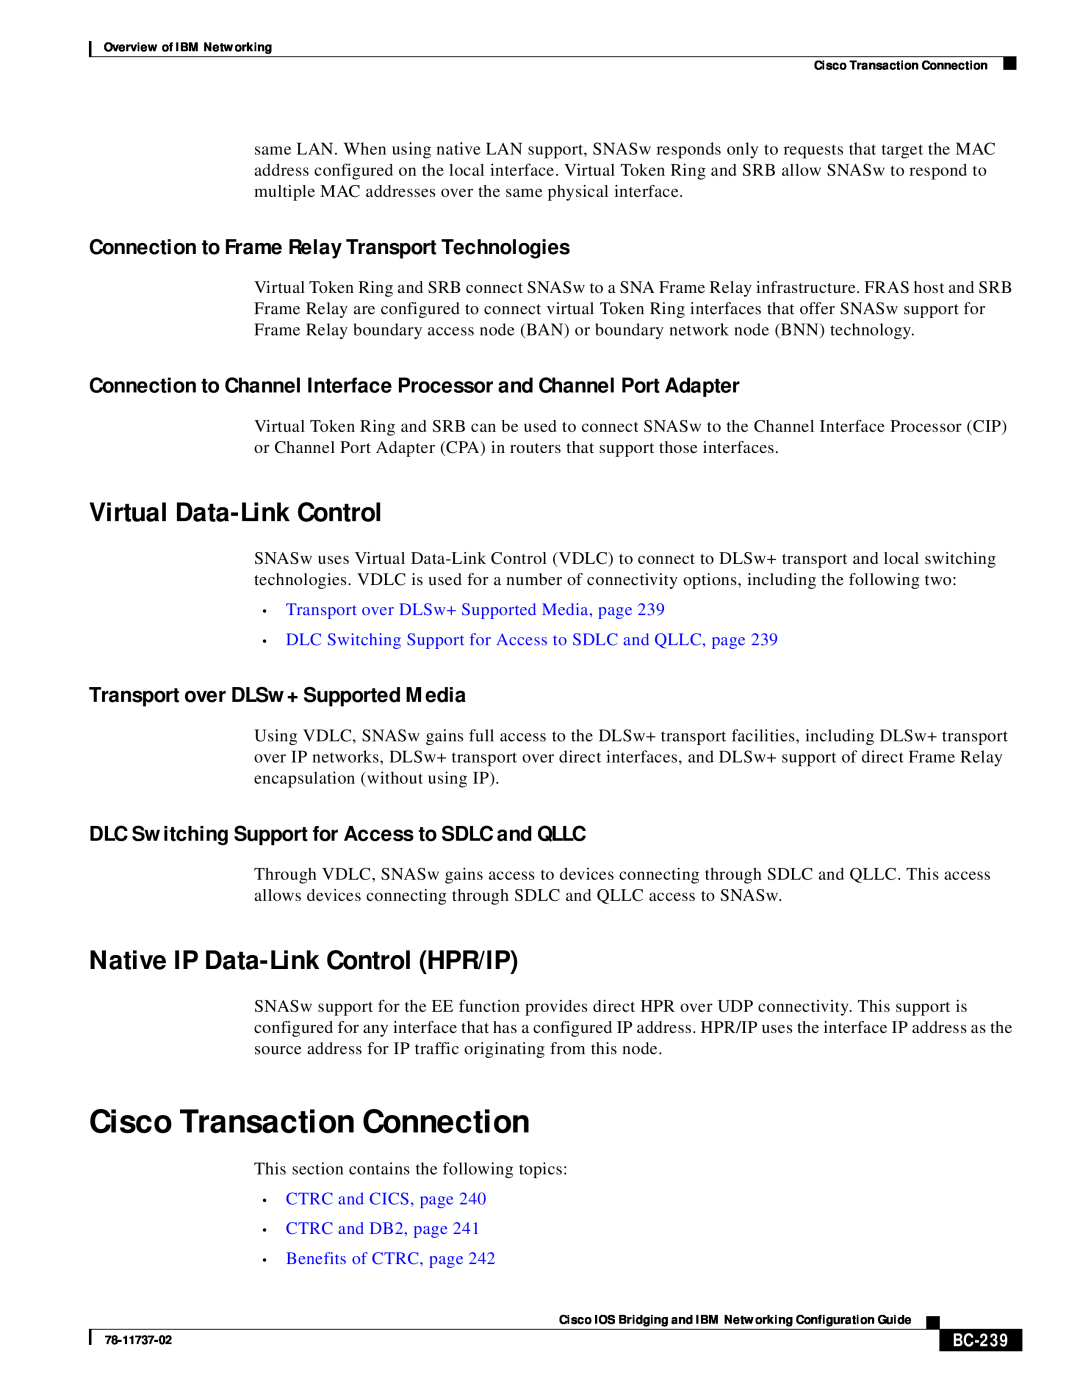 IBM BC-201 manual Cisco Transaction Connection, Virtual Data-Link Control, Native IP Data-Link Control HPR/IP, BC-239 